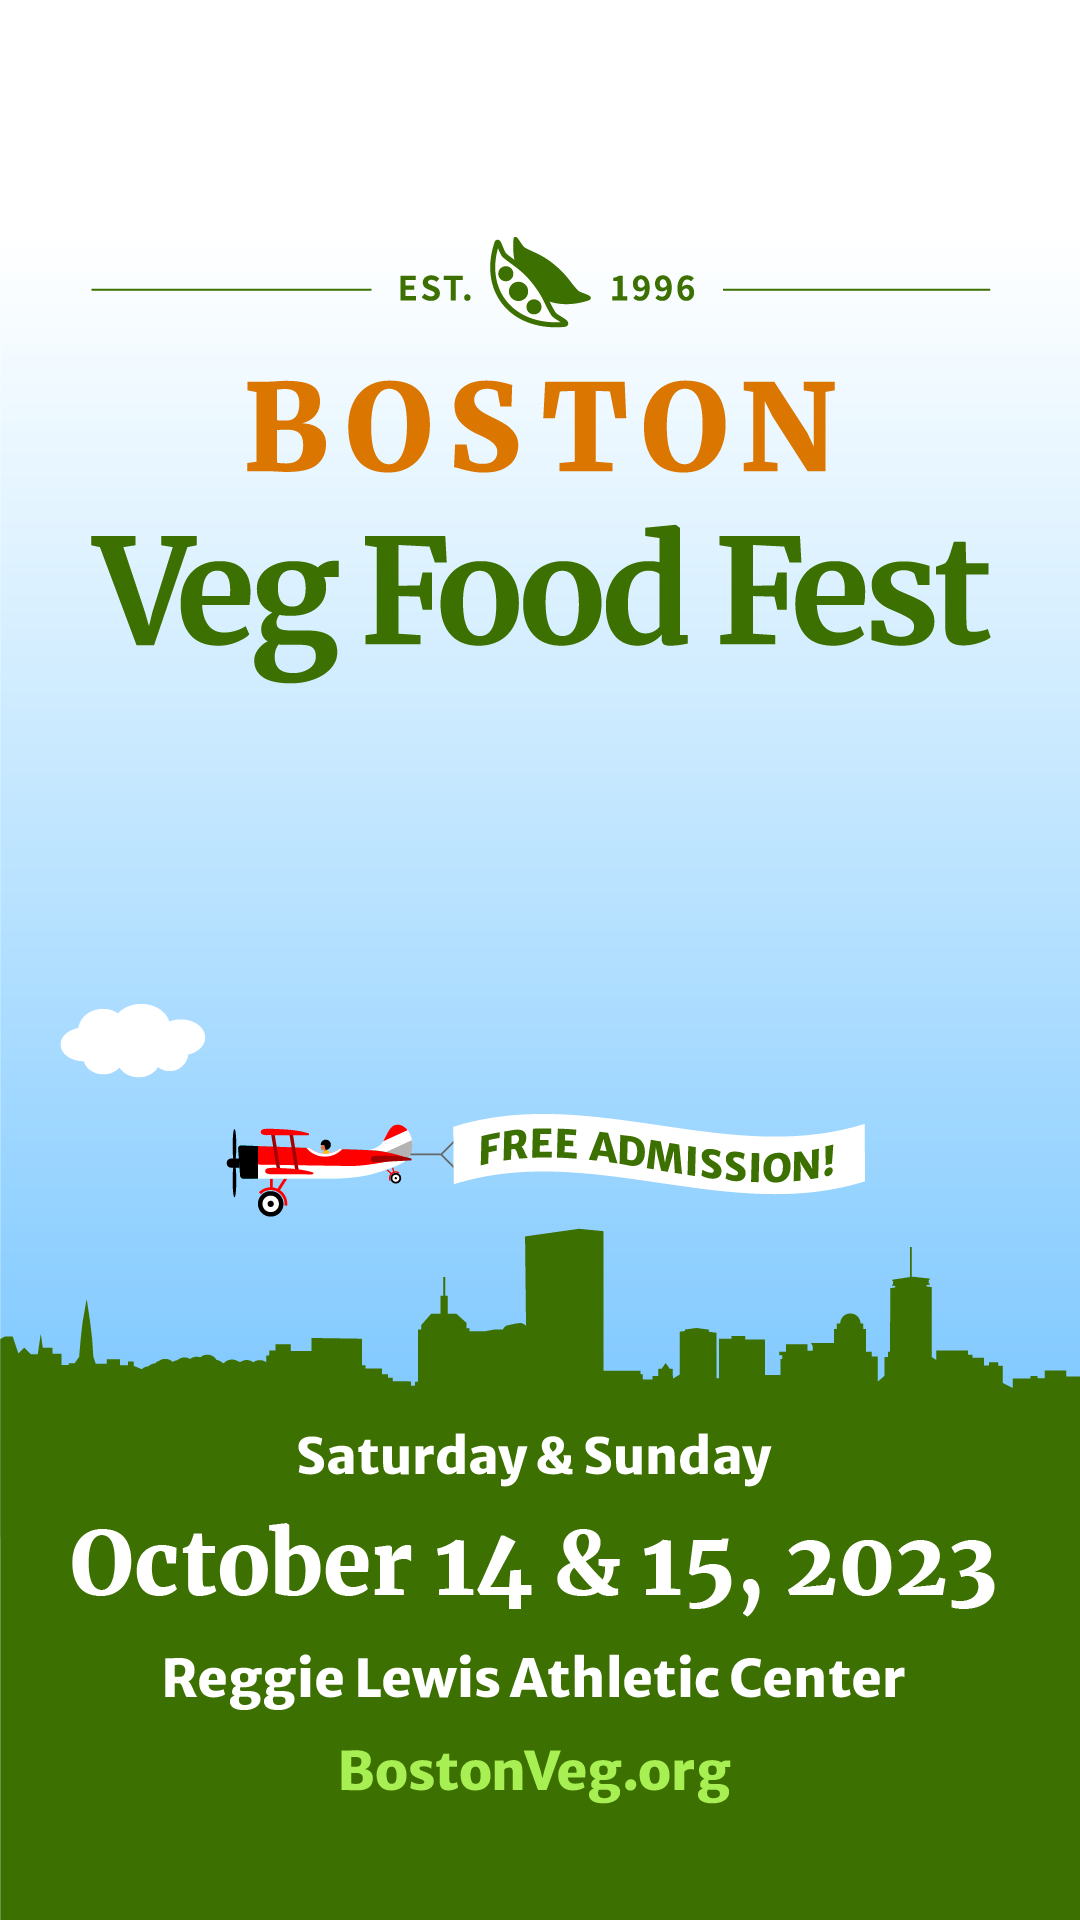 Boston Veg Food Fest, Saturday and Sunday, October 14 and 15, 2023, Reggie Lewis Athletic Center, bostonveg.org, free admission